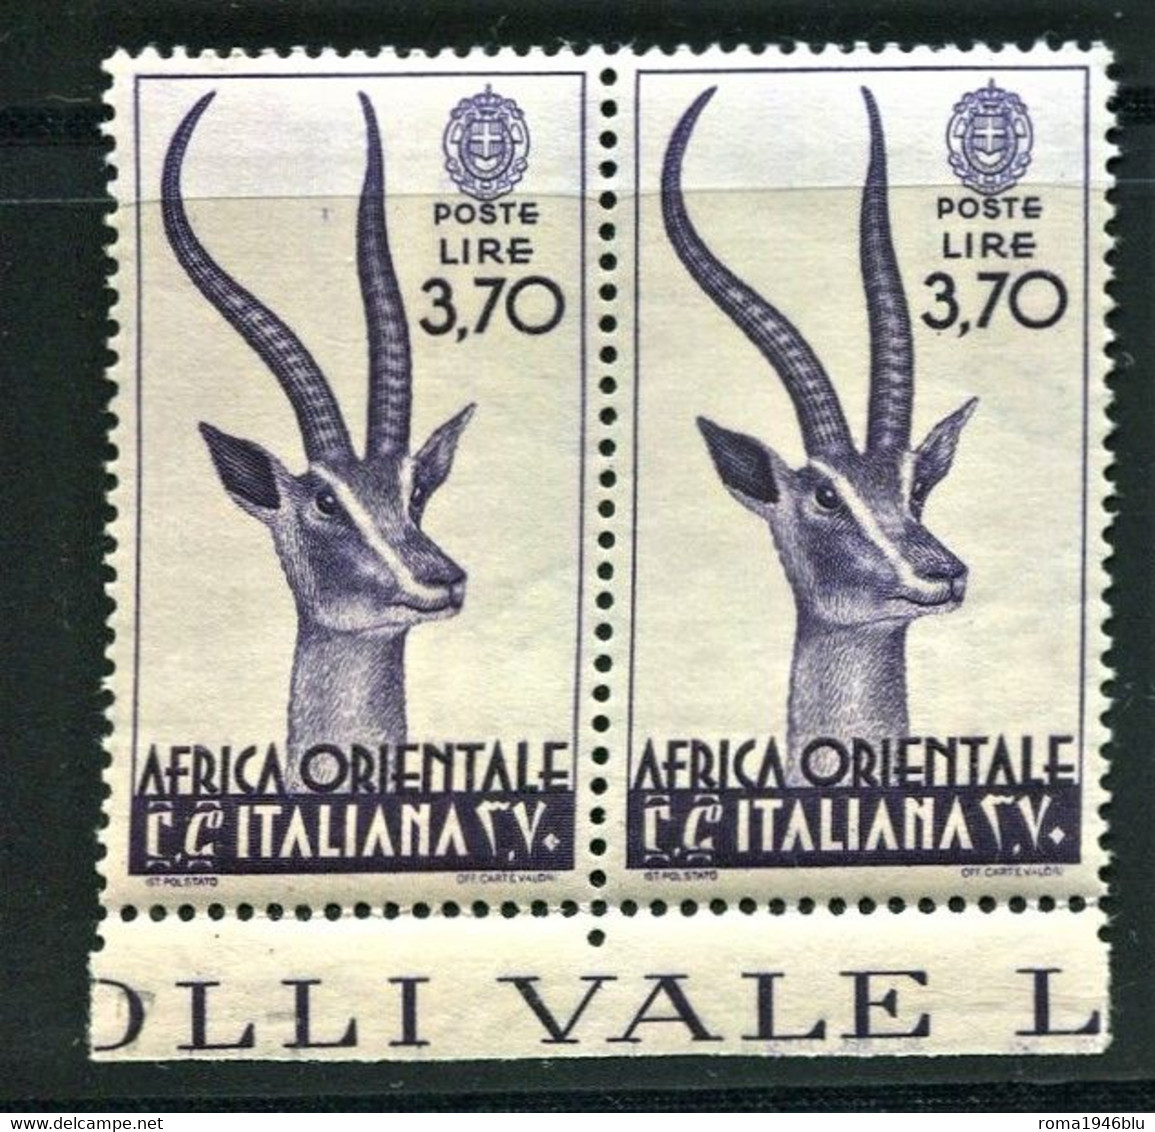 AFRICA ORIENTALE ITALIANA 1938 SOGGETTI VARI P.O. 3,70 COPPIA  ** MNH - Italiaans Oost-Afrika